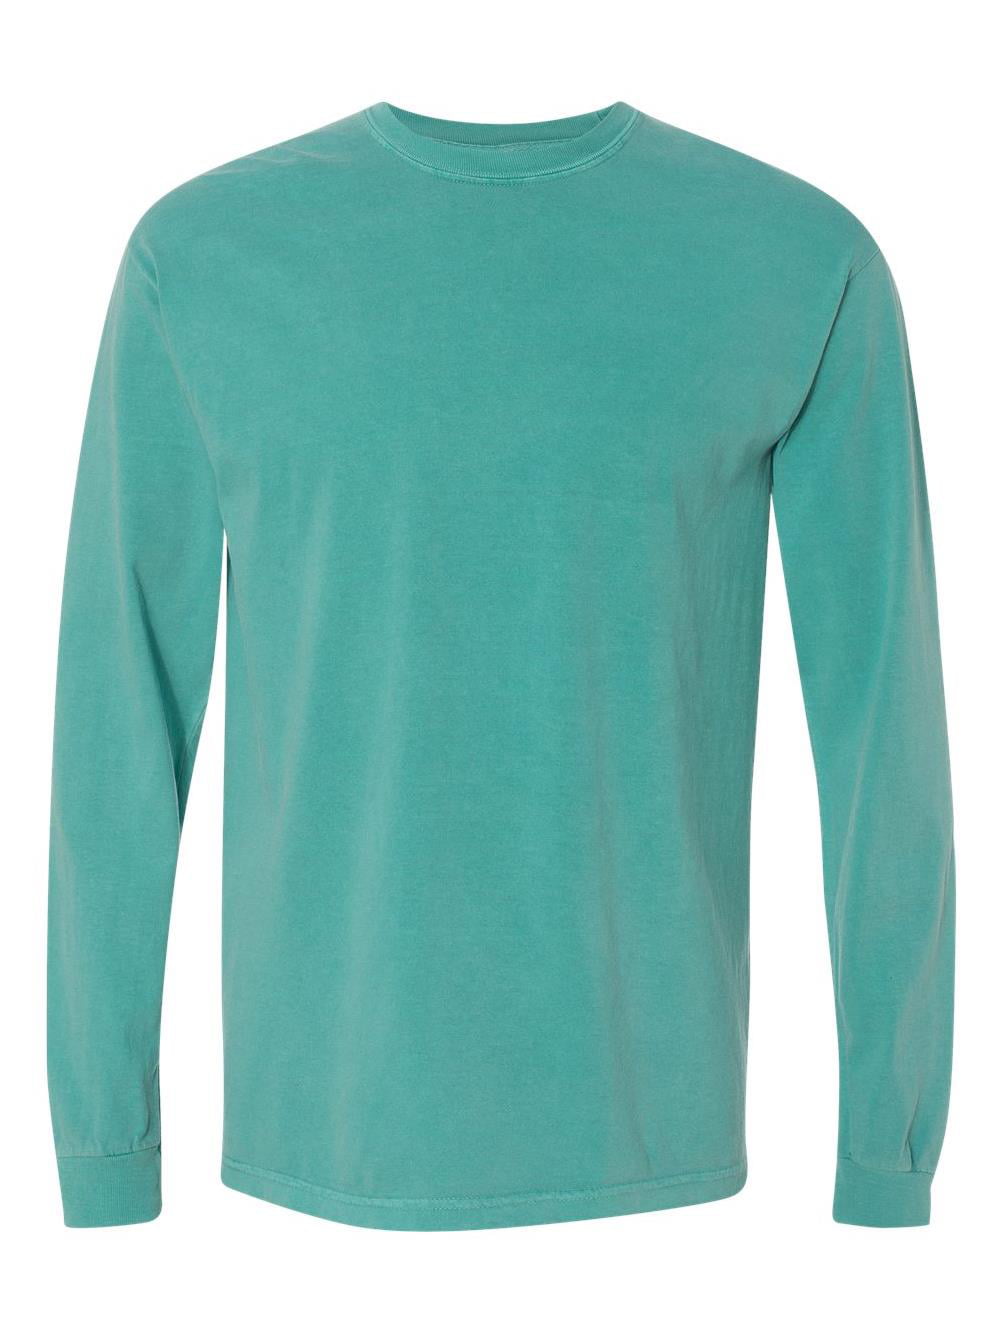 COMFORT COLORS - Comfort Colors T-Shirts - Long Sleeve Garment Dyed ...